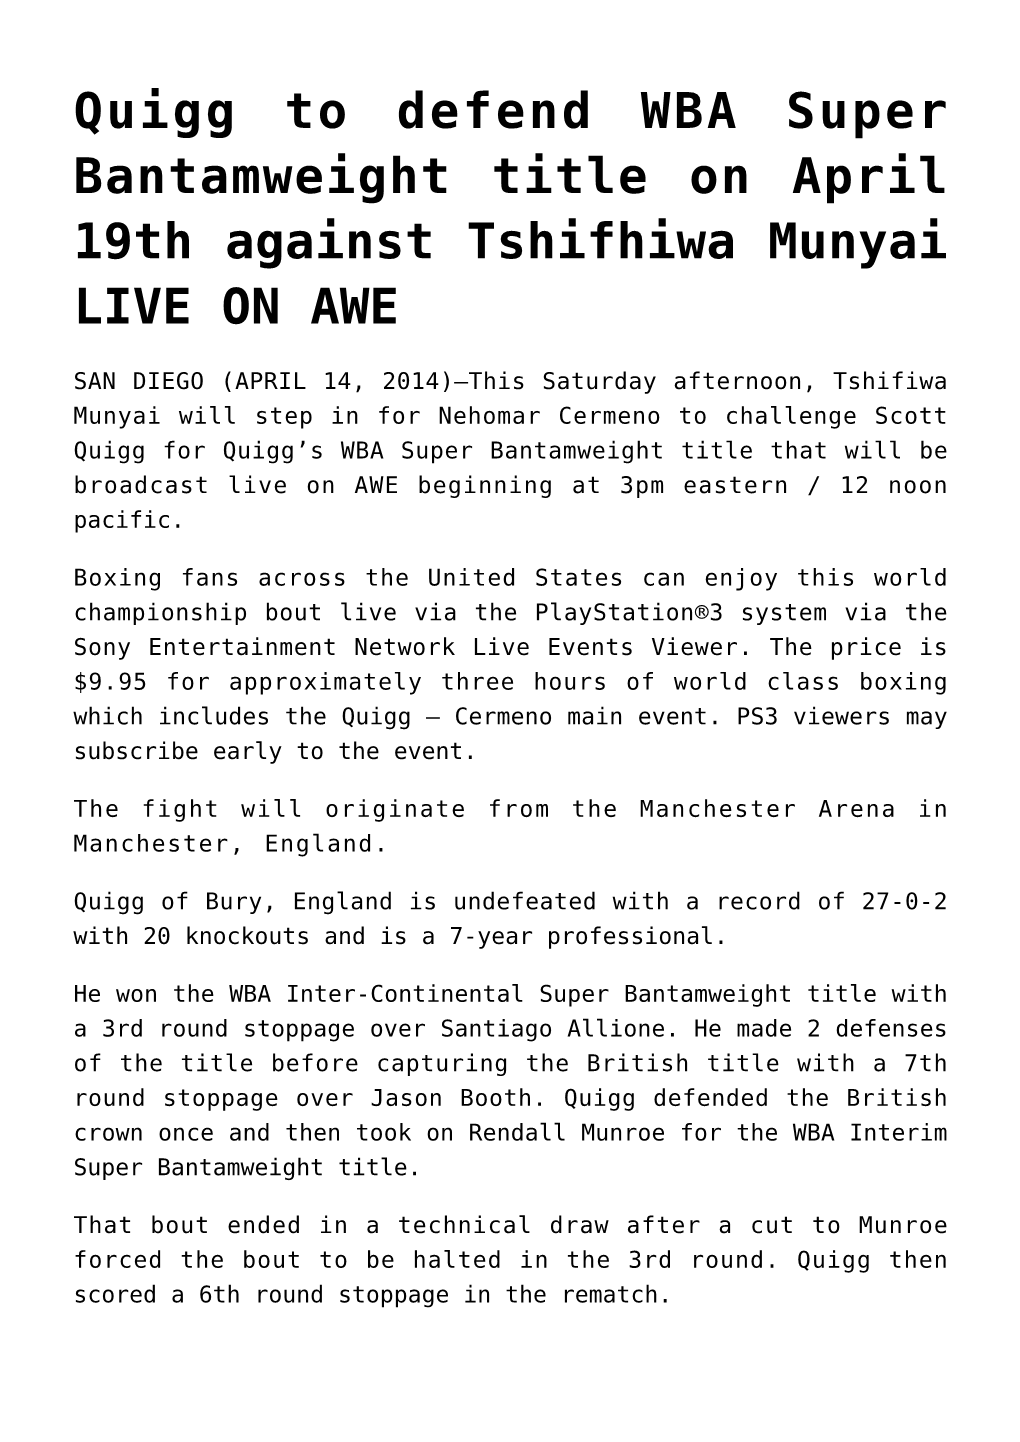 Quigg to Defend WBA Super Bantamweight Title on April 19Th Against Tshifhiwa Munyai LIVE on AWE